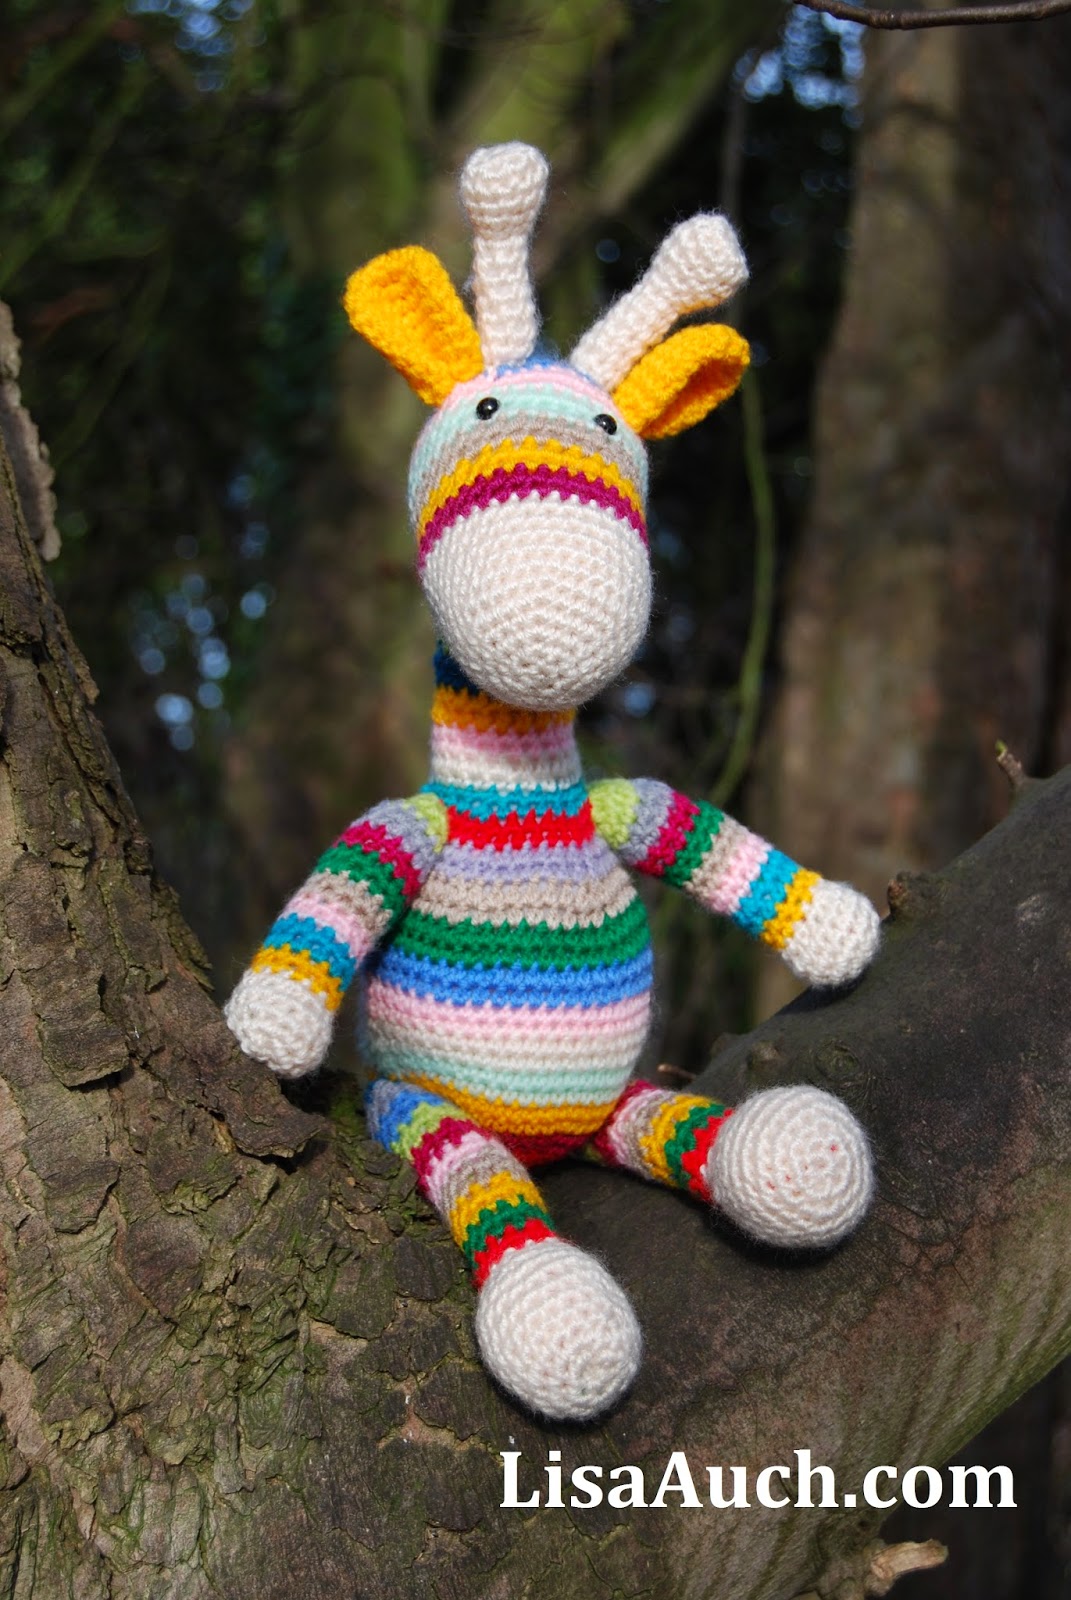 giraffe crochet patterns free- crochet toy patterns easy, lisaauch, crochet